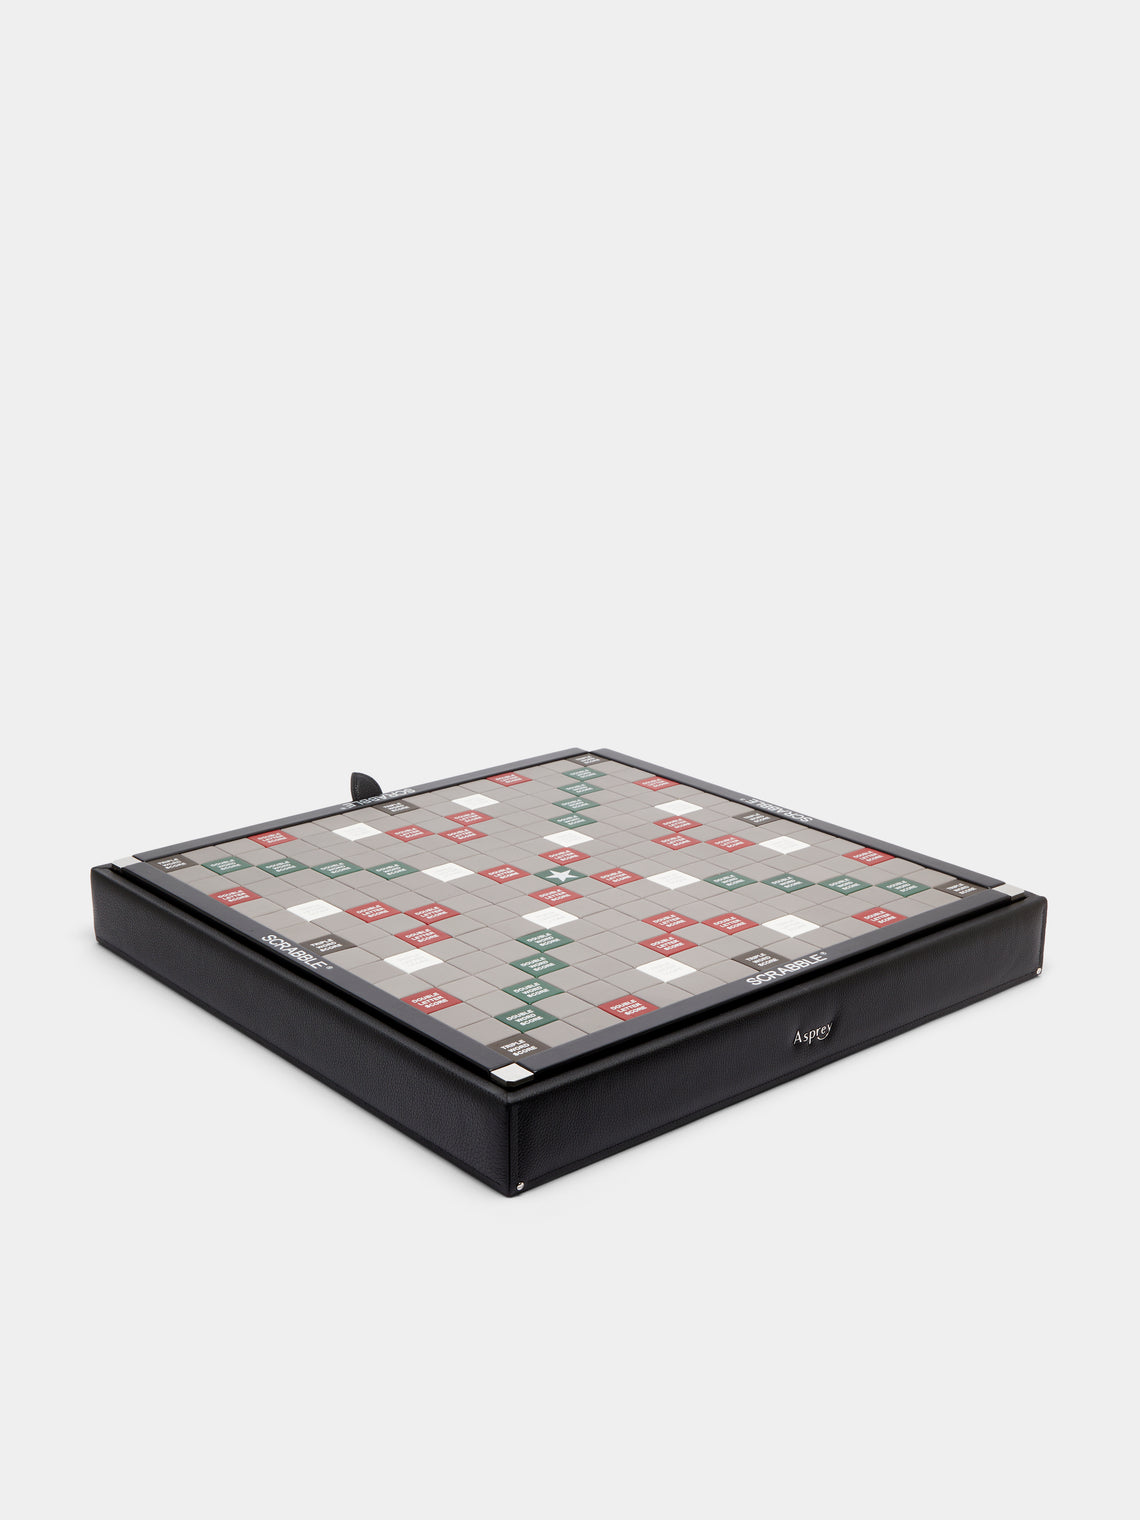 Asprey - Hanover Leather Scrabble Set - Black - ABASK